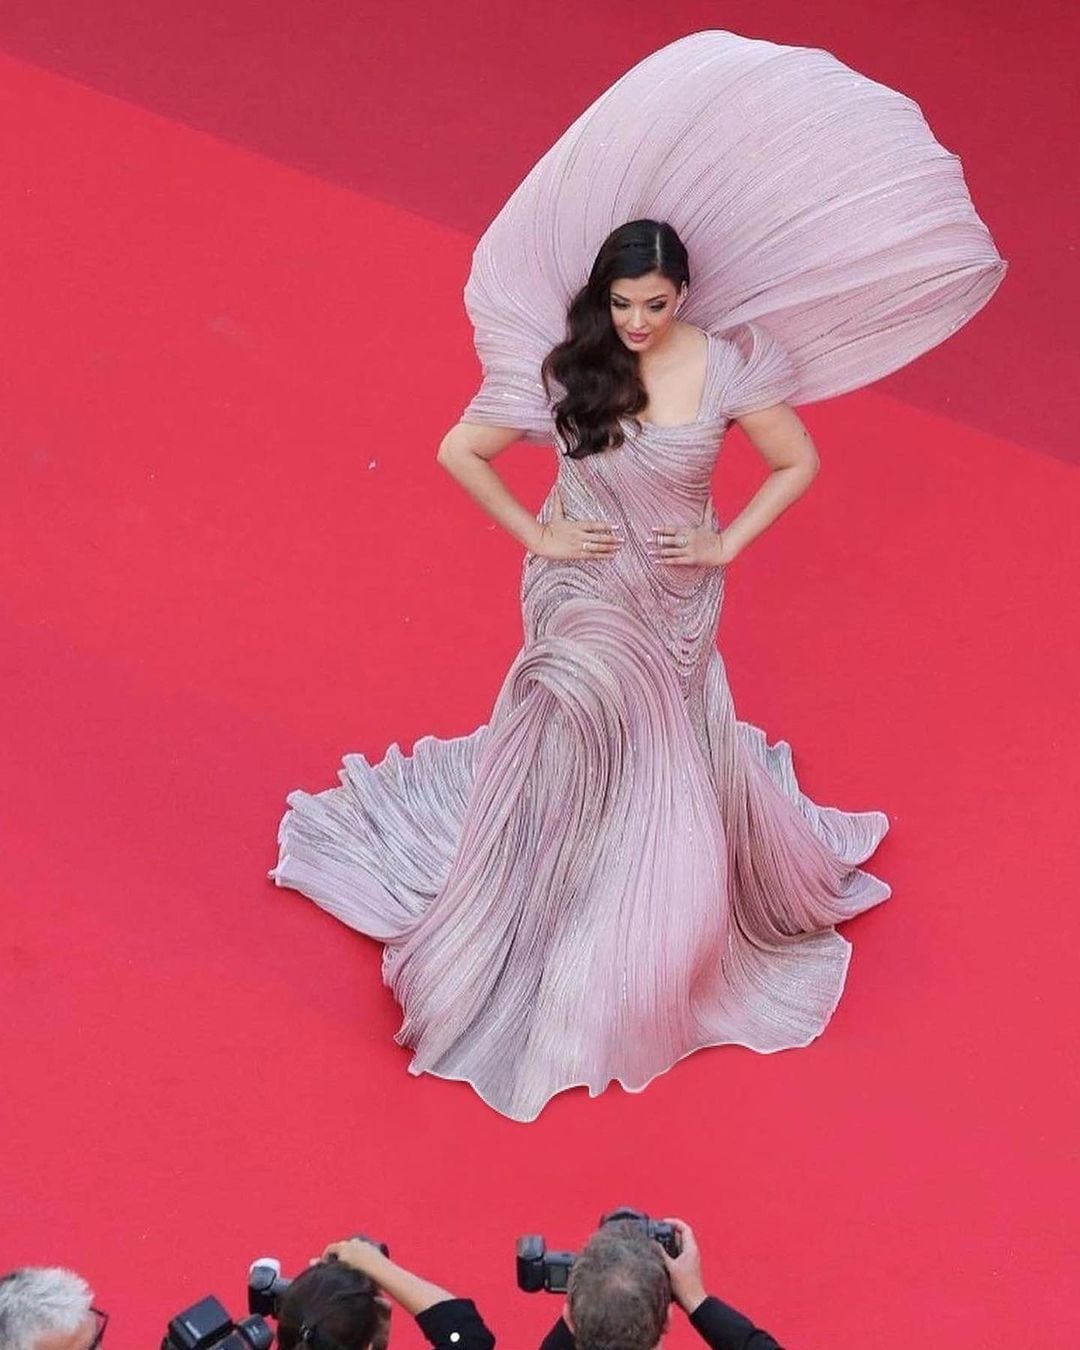 Aishwarya Rai Bachchan wore The Venus Sculpture, a custom gown by Gaurav Gupta for the 75th Festival Day Cannes.